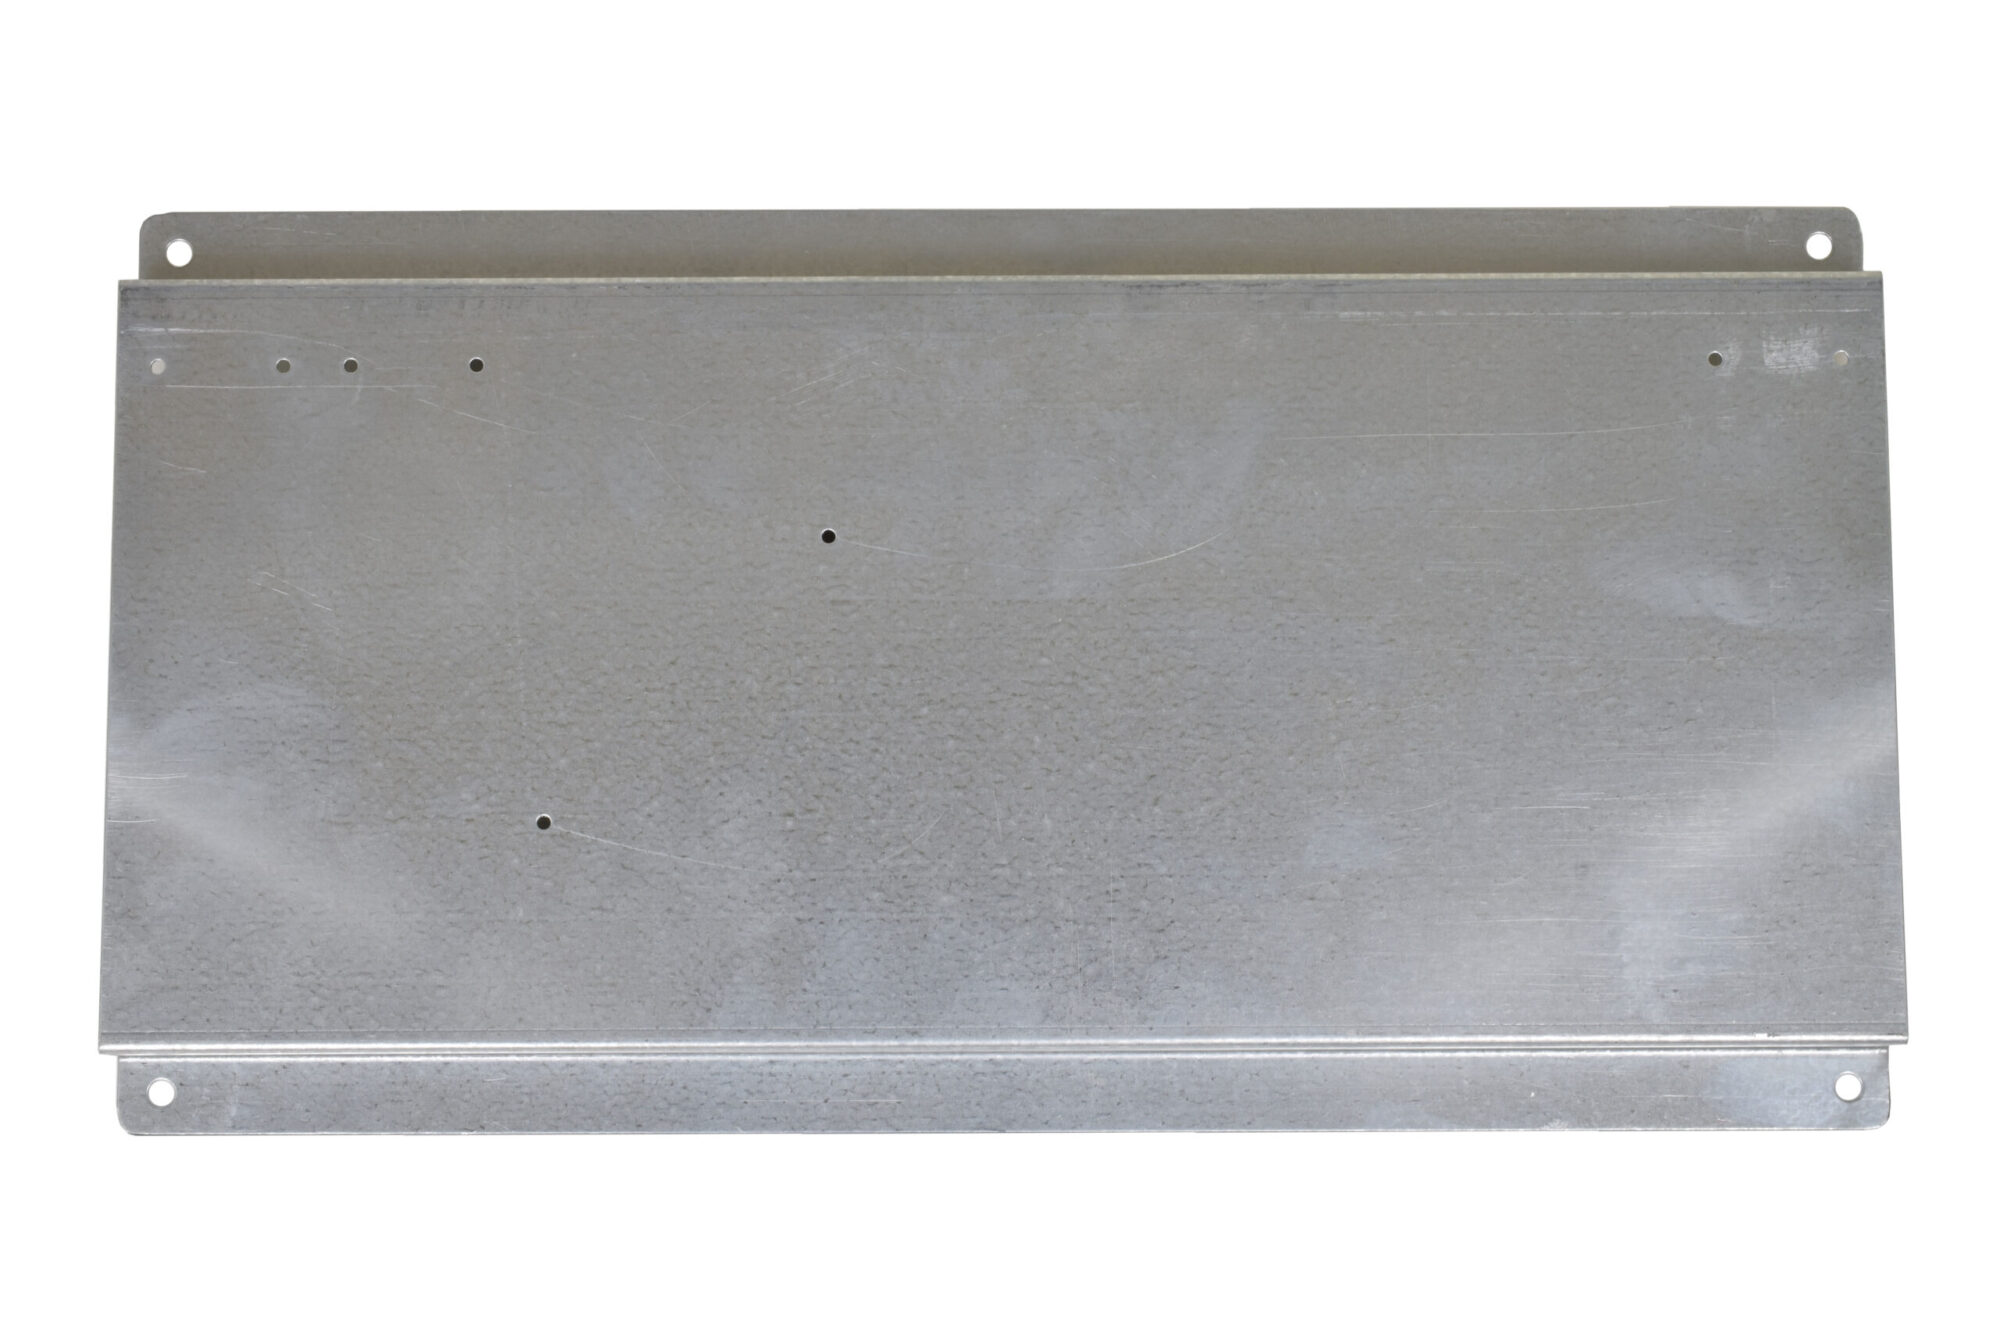 Galvanized Aluminum Plate - 16" L x 8 1/2" W x 1/2" D